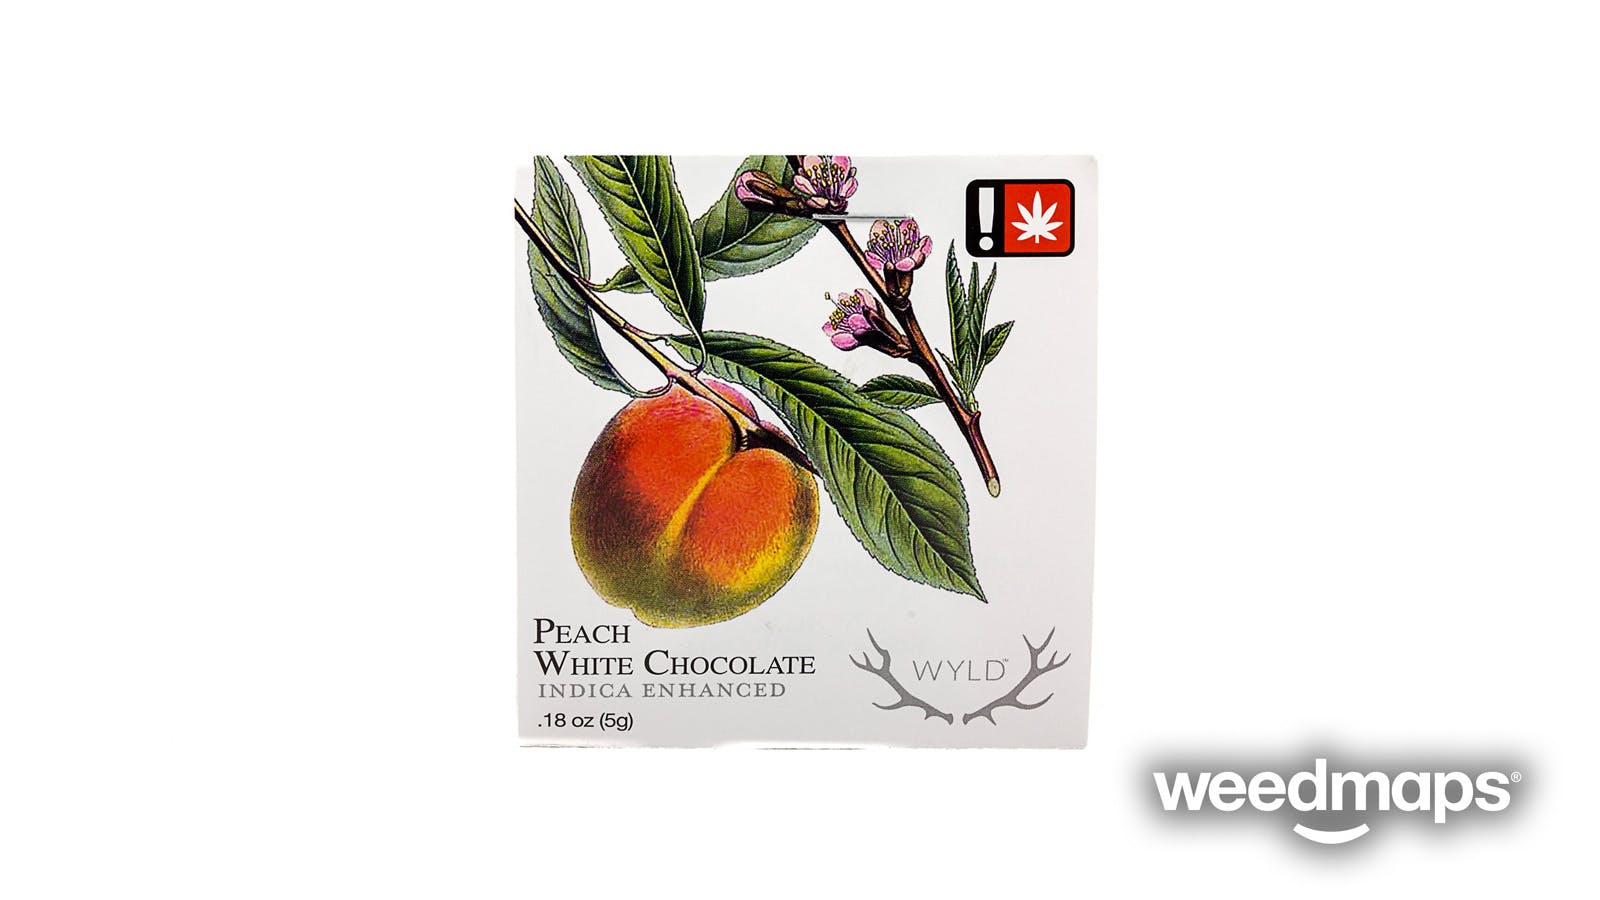 marijuana-dispensaries-6126-se-duke-st-2c-unit-a-portland-wyld-peach-white-chocolate-indica-50mgthc